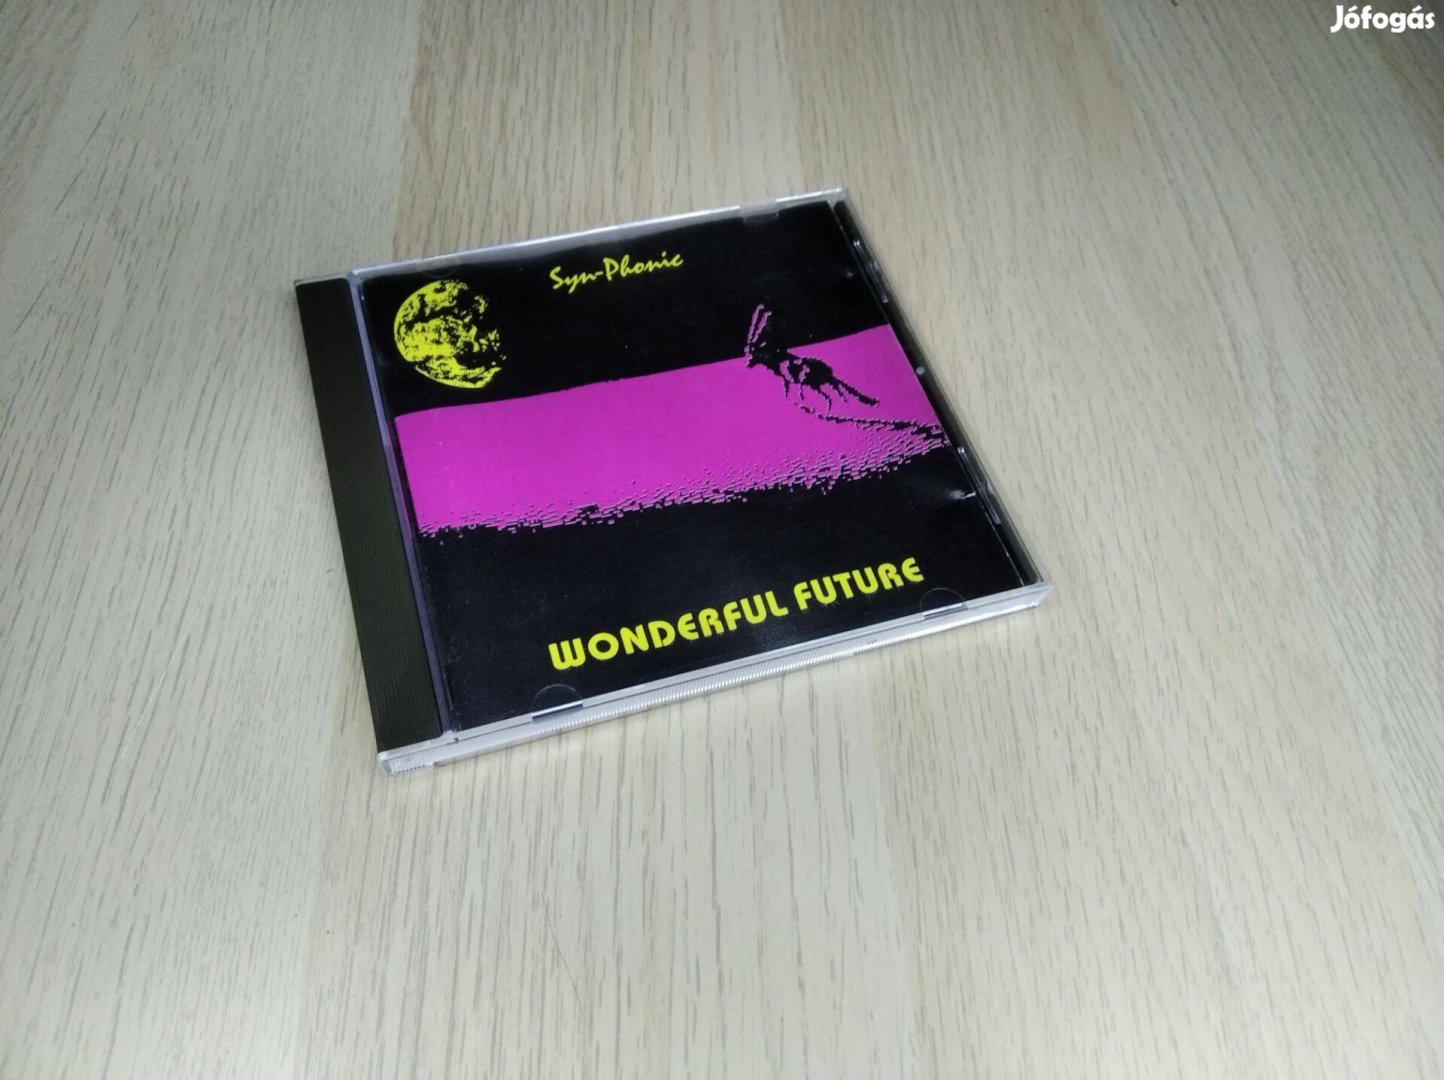 Syn-Phonic - Wonderful Future / CD (Hungary 1994.)